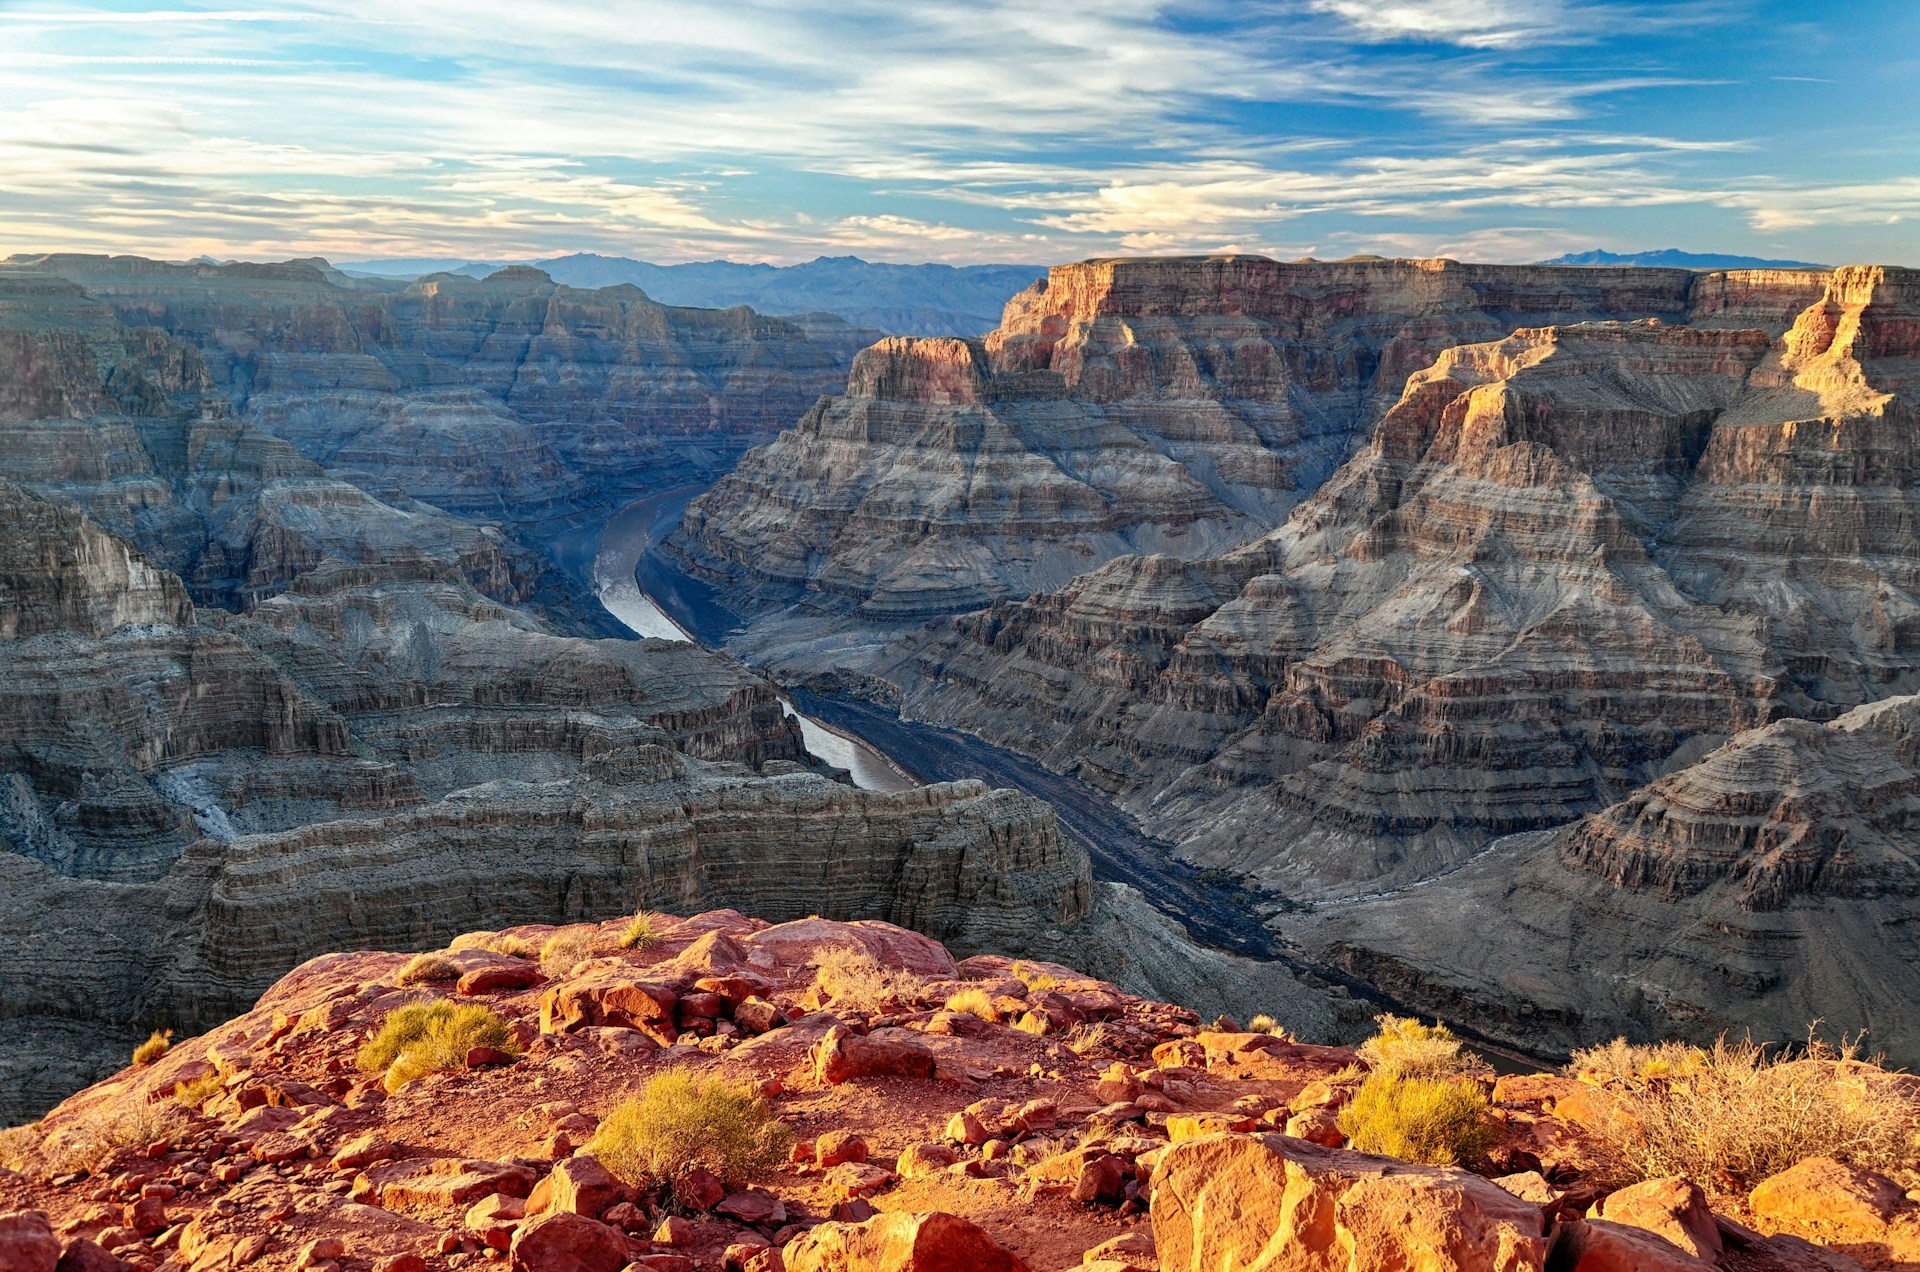 The Grand Canyon tour